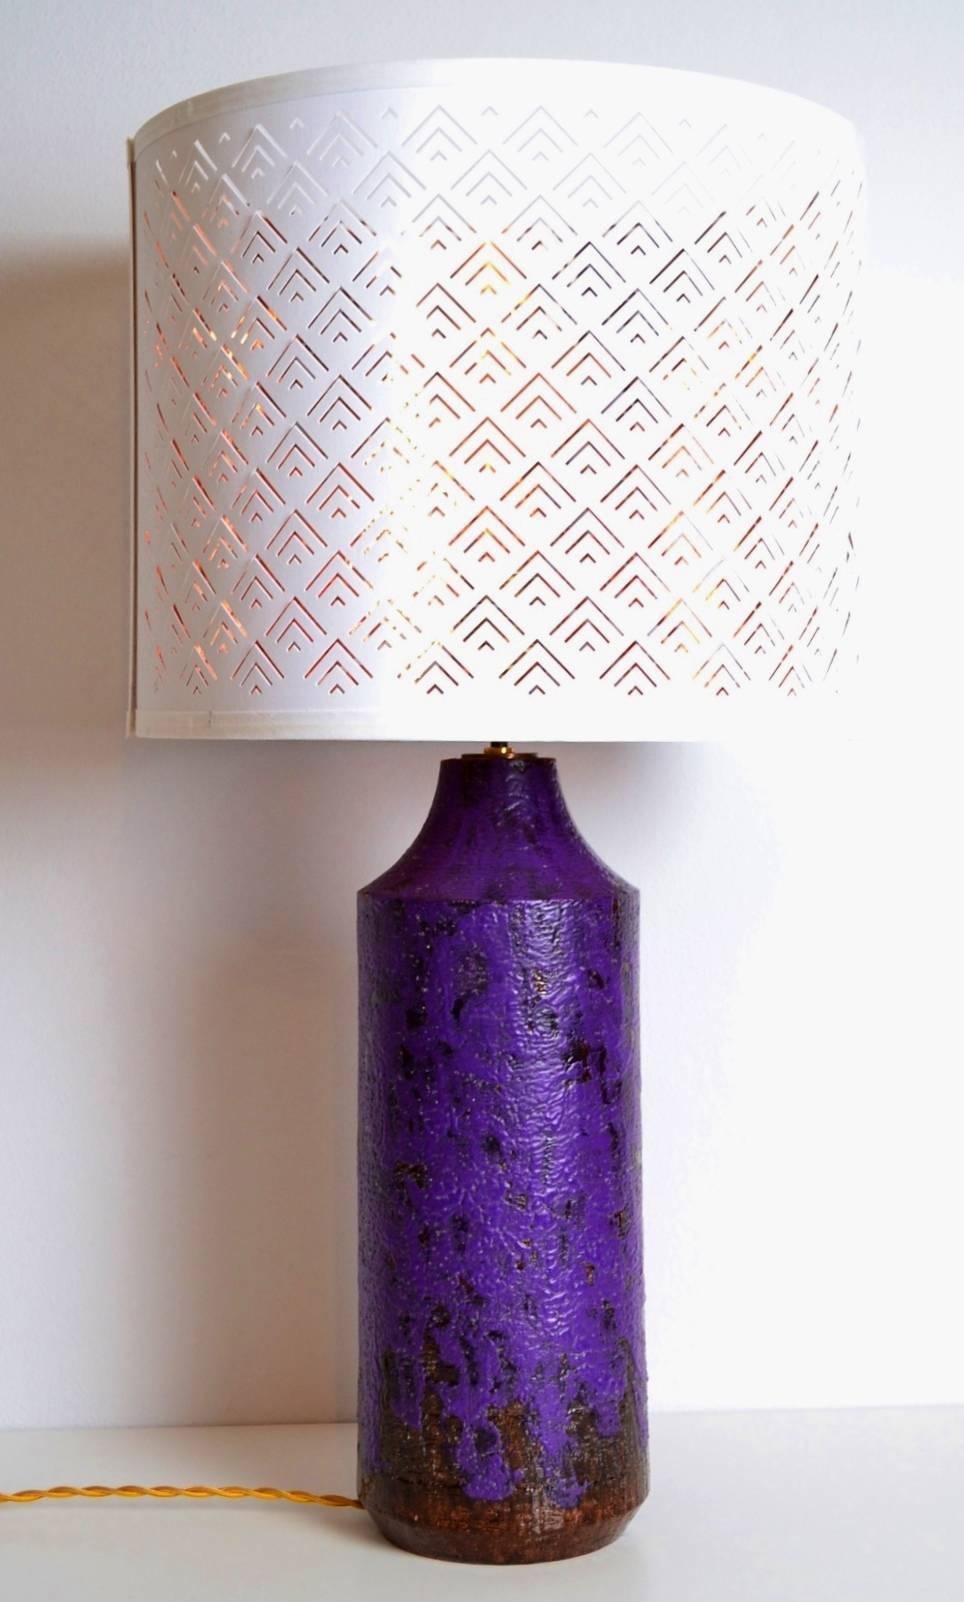 Hand-Crafted Aldo Londi Ceramic Lamp Base for Bitossi, Italy, 1967-1970